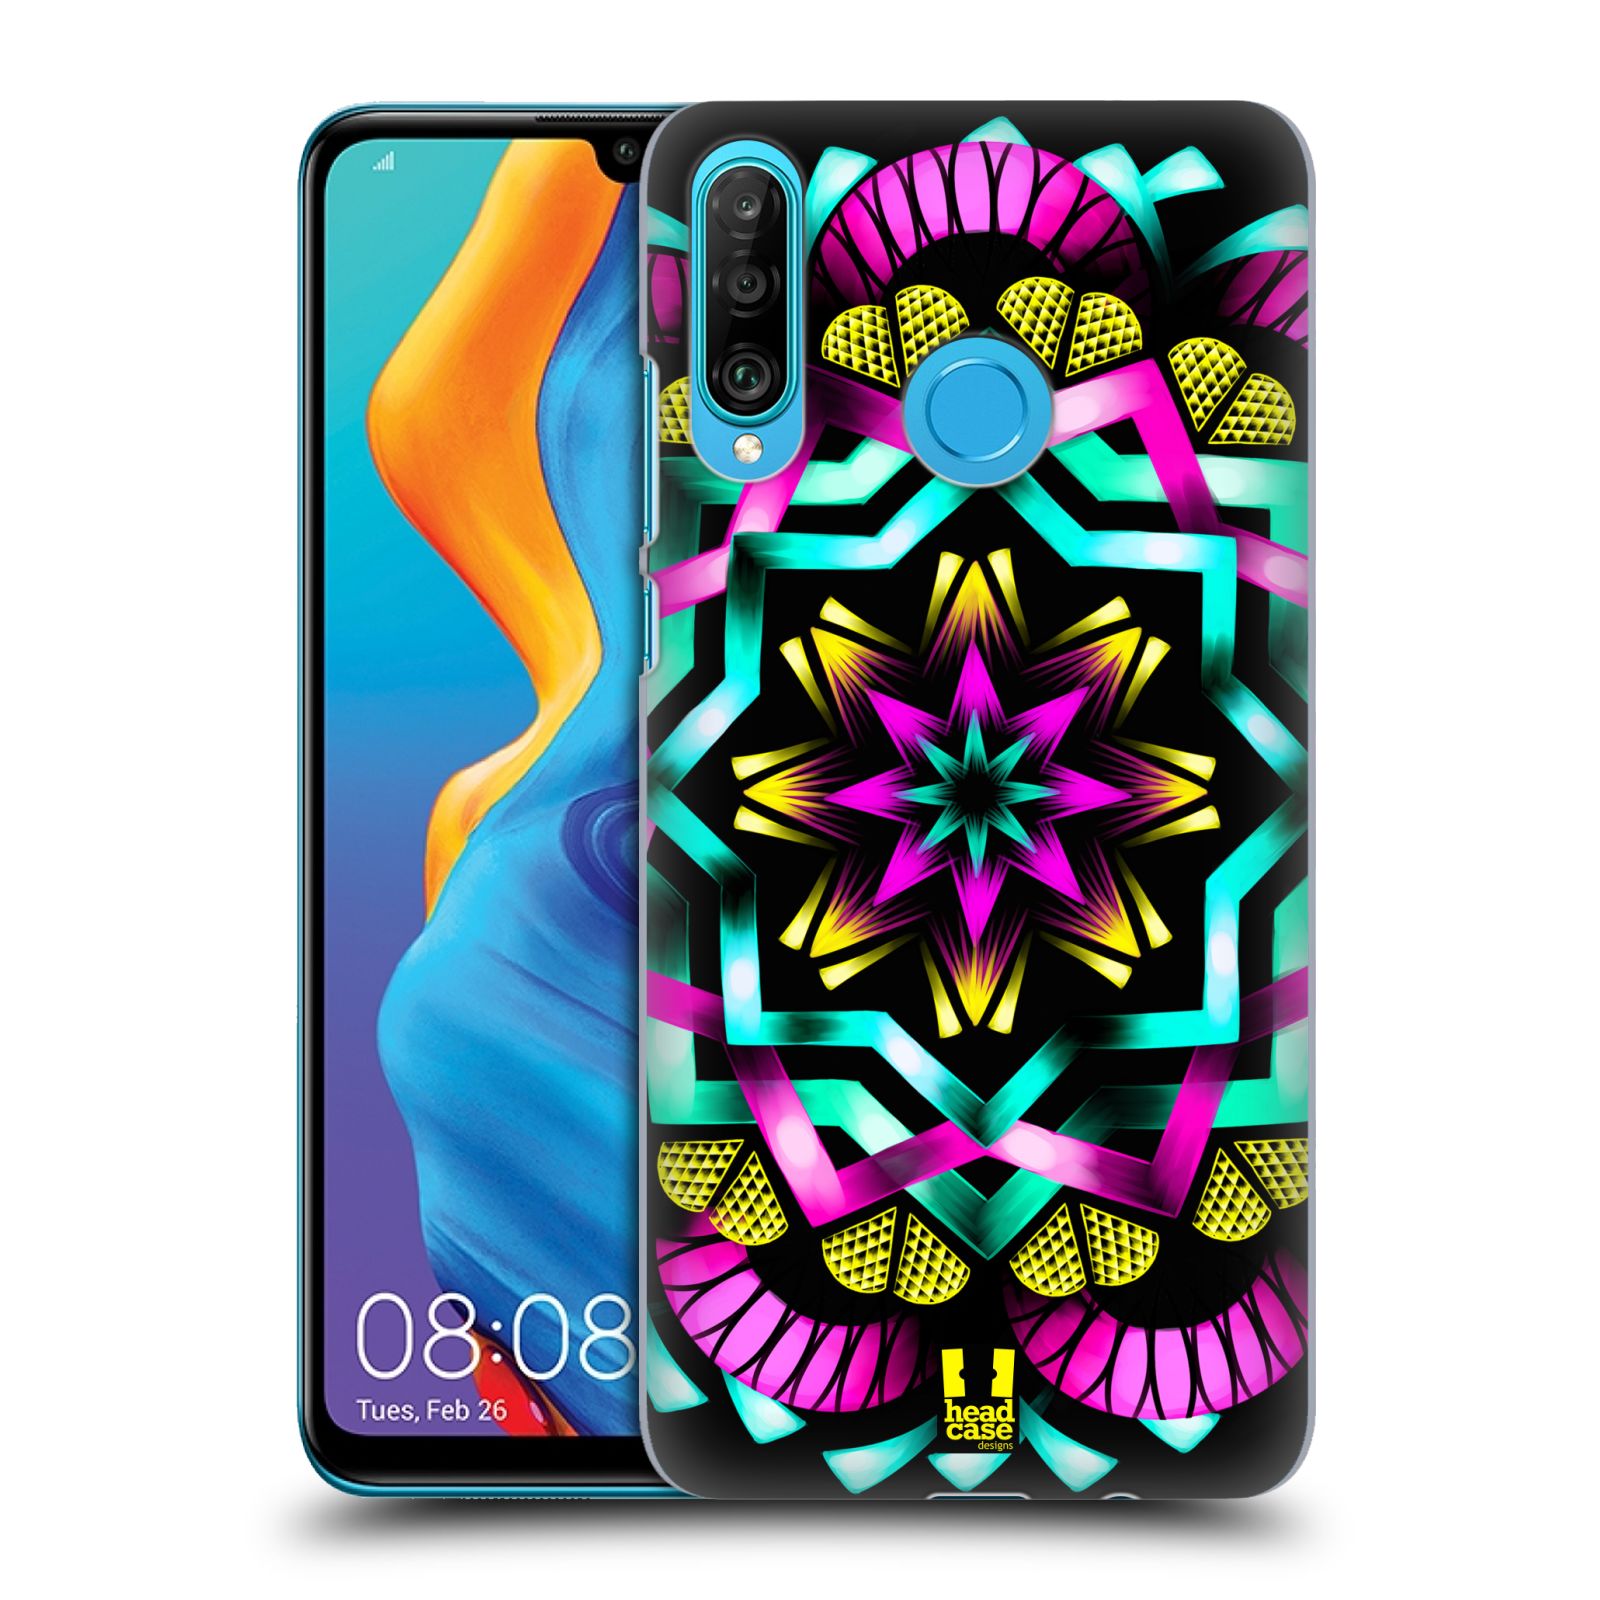 Pouzdro na mobil Huawei P30 LITE - HEAD CASE - vzor Indie Mandala kaleidoskop barevný vzor SLUNCE